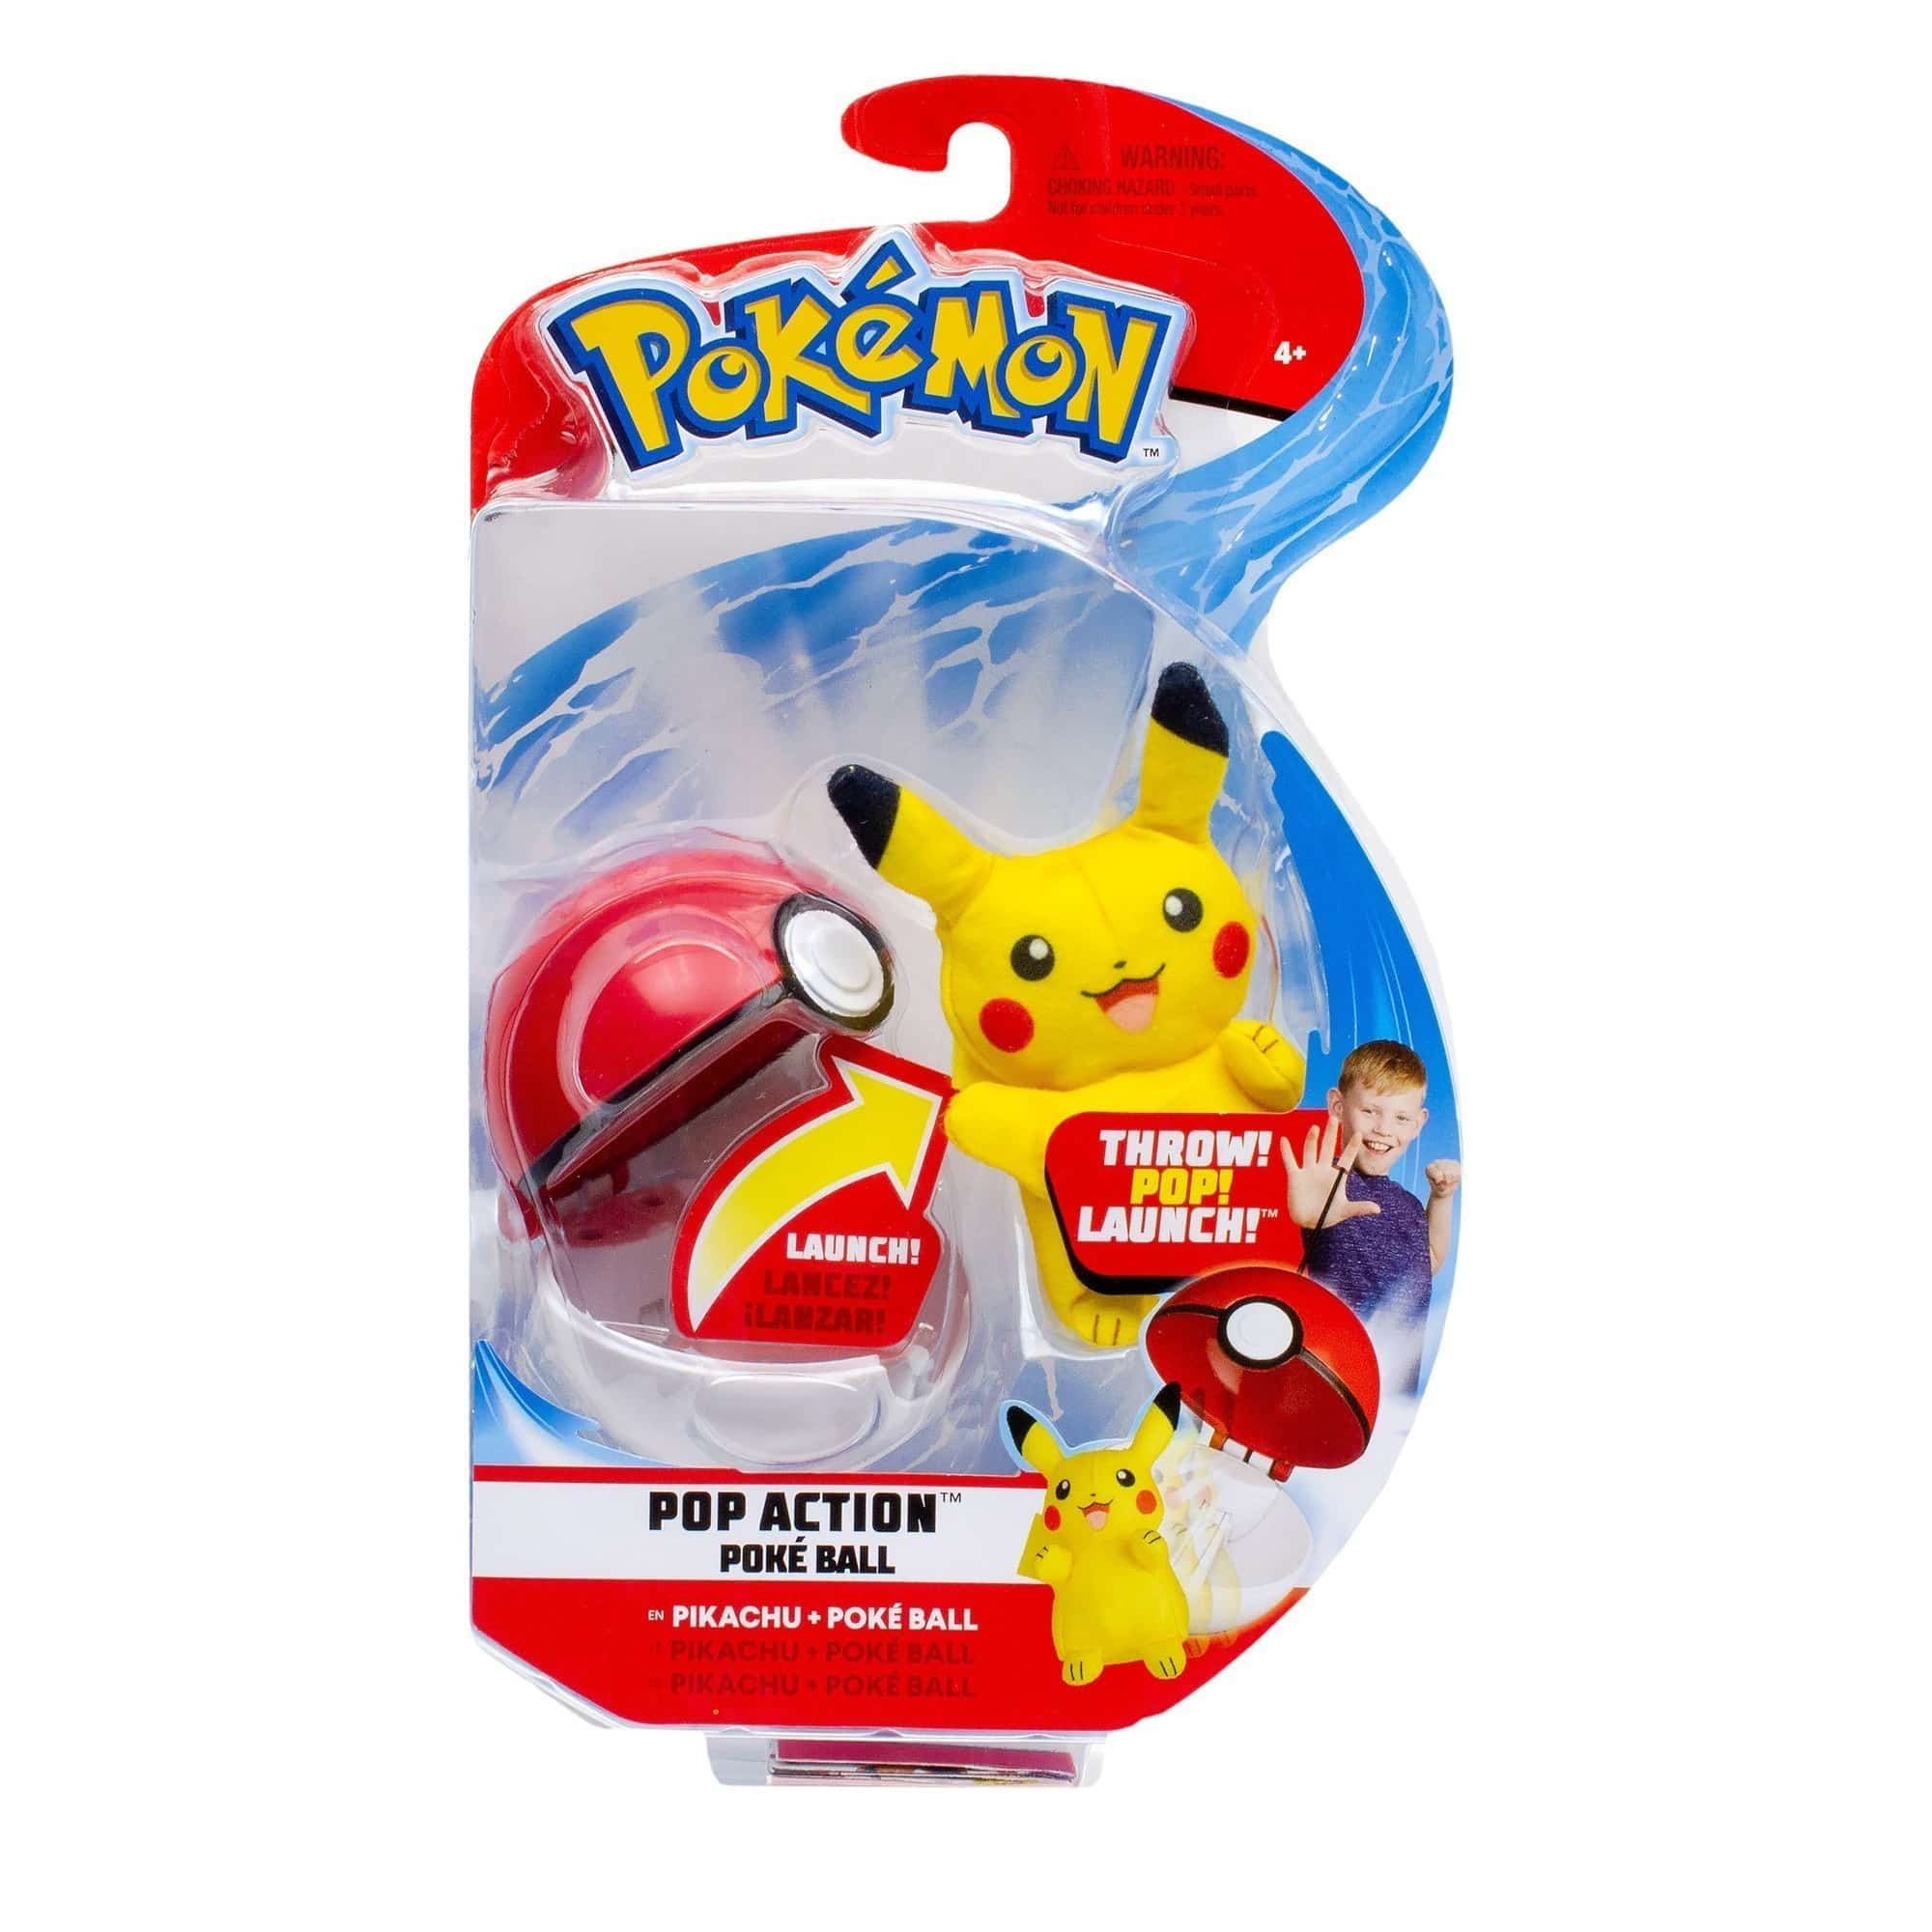 Pokémon - Pop Action Poké Ball - Pikachu Poke Ball